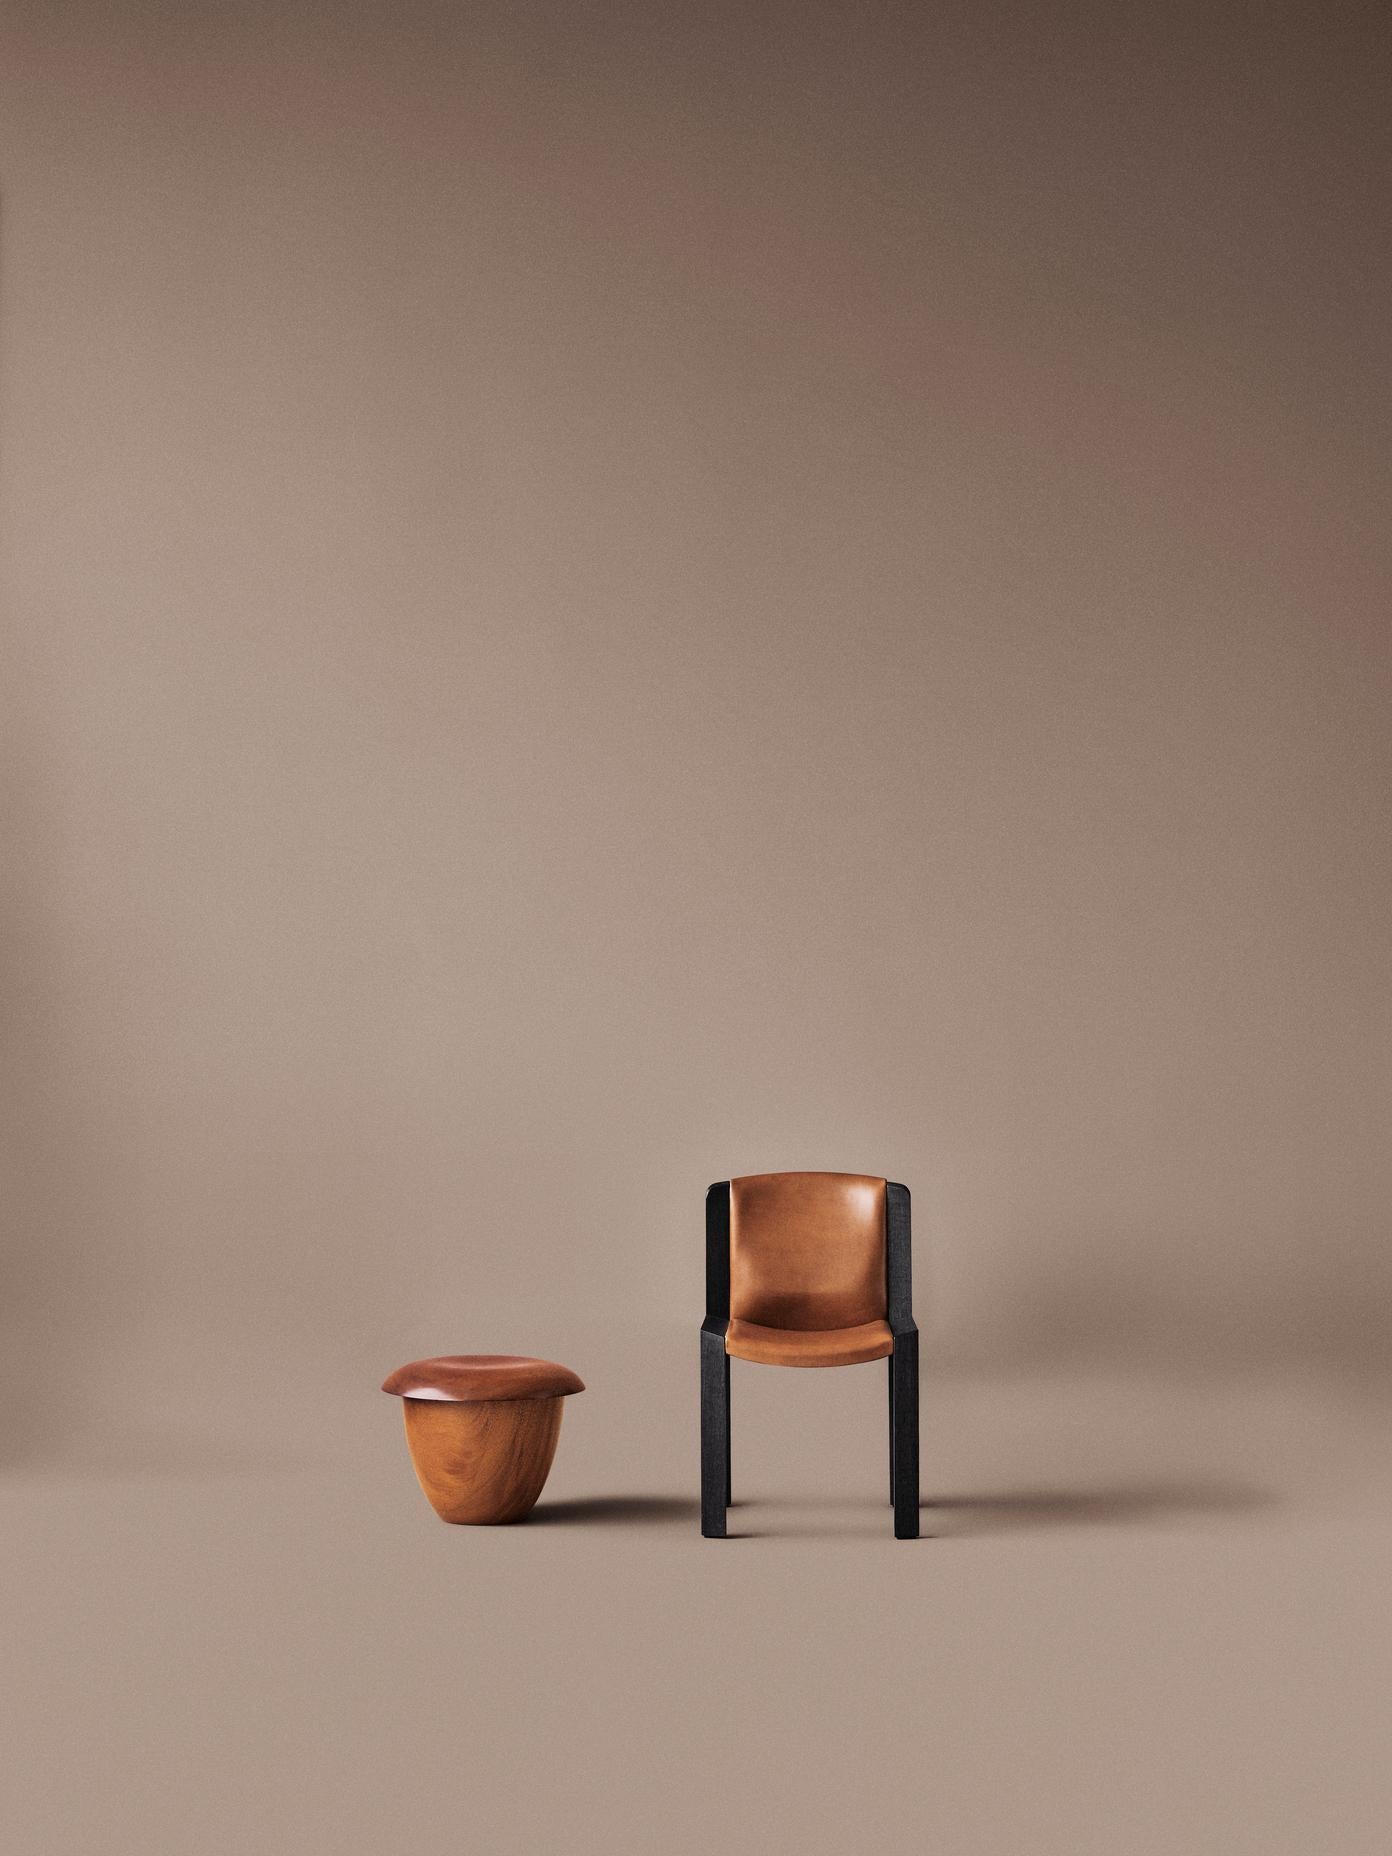 Mid-Century Modern Joe Colombo 'Chair 300' Wood and Sørensen Leather by Karakter For Sale